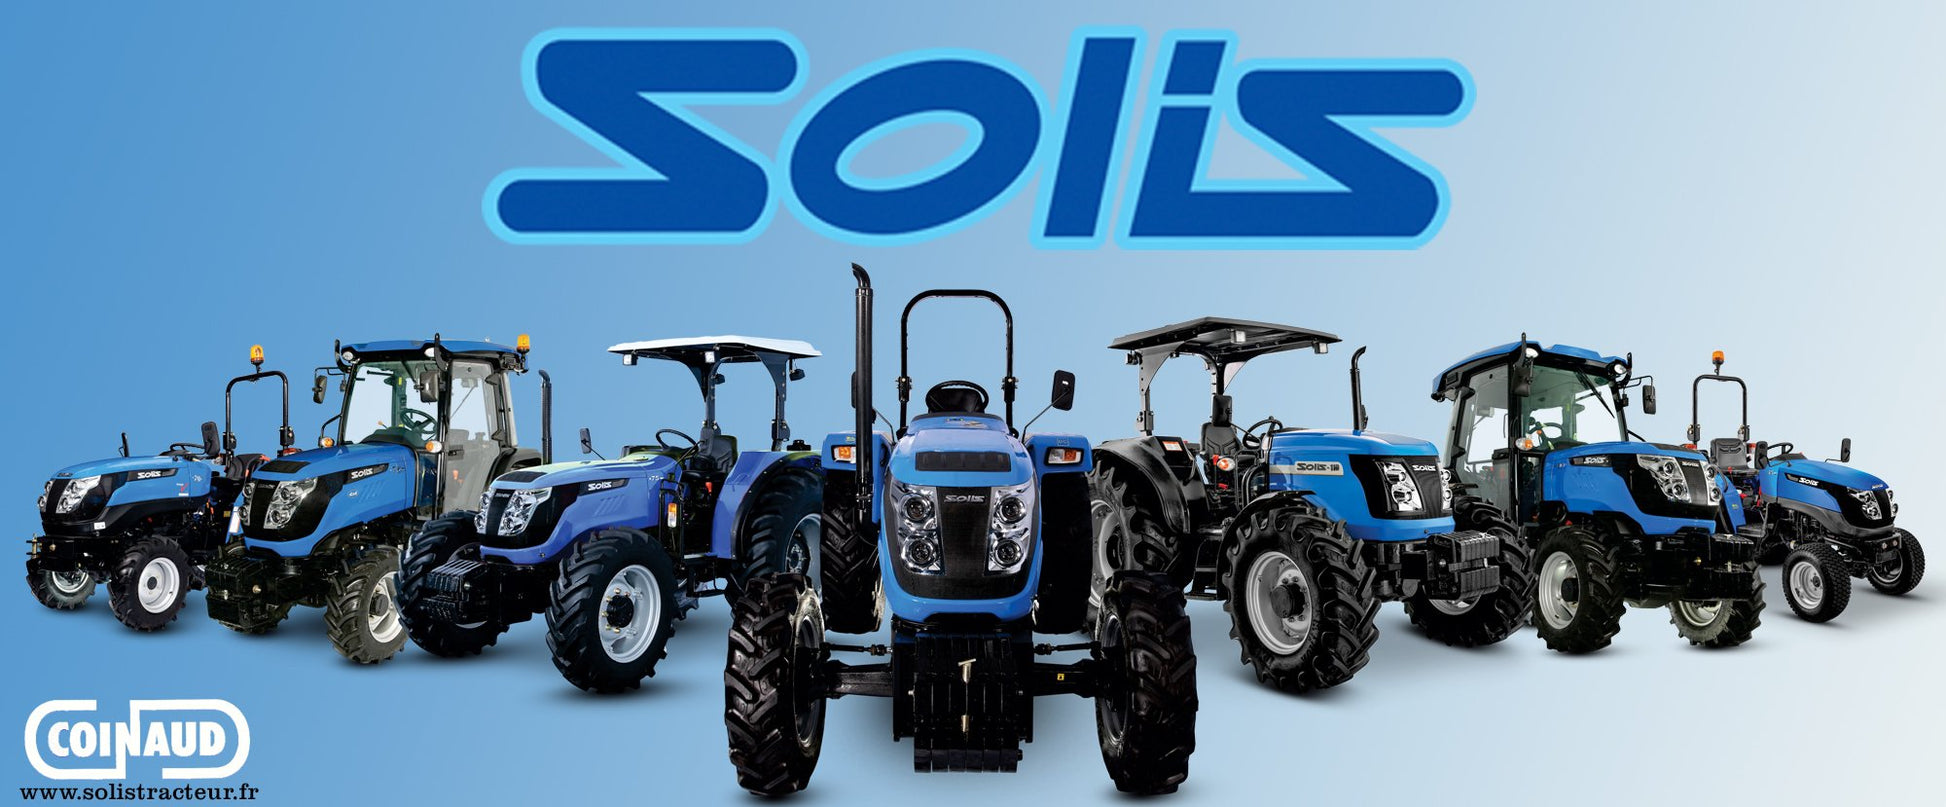 Micro-tracteur SOLIS 26 - Solis Tracteurs - Coinaud importateur